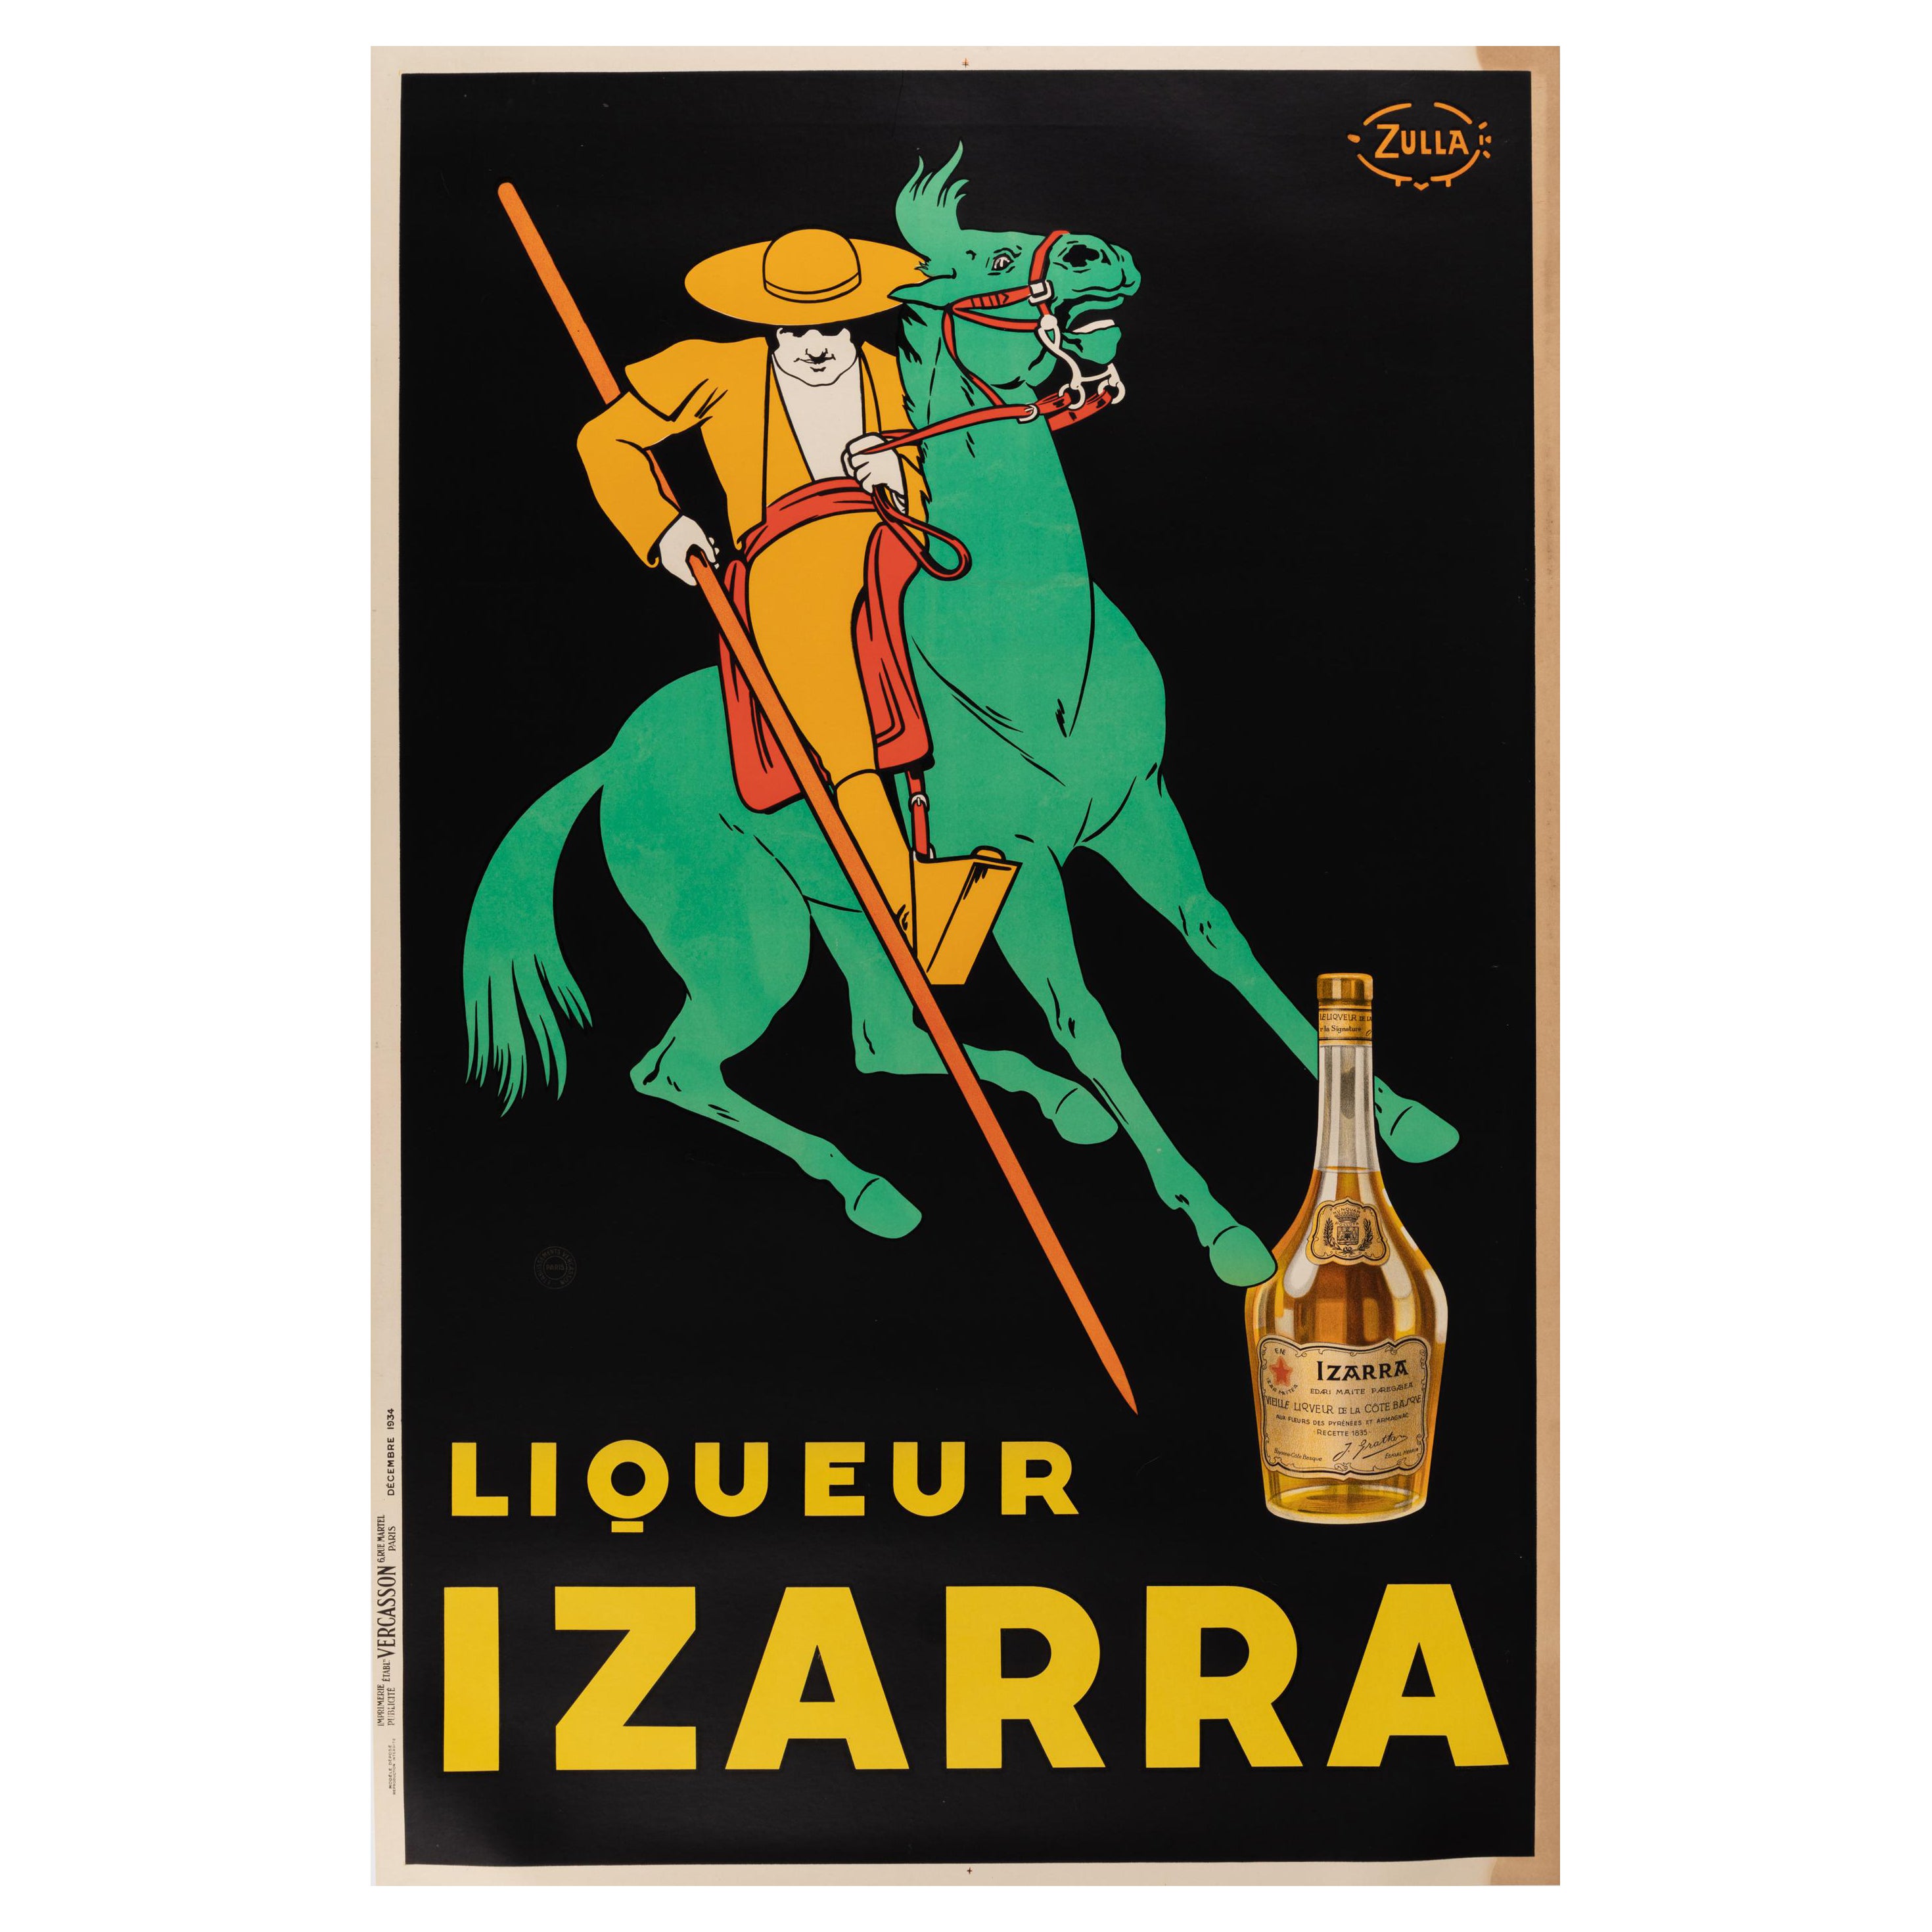 Zulla, affiche vintage originale, Izarra Liquor, Pays Basque, Armagnac, 1934